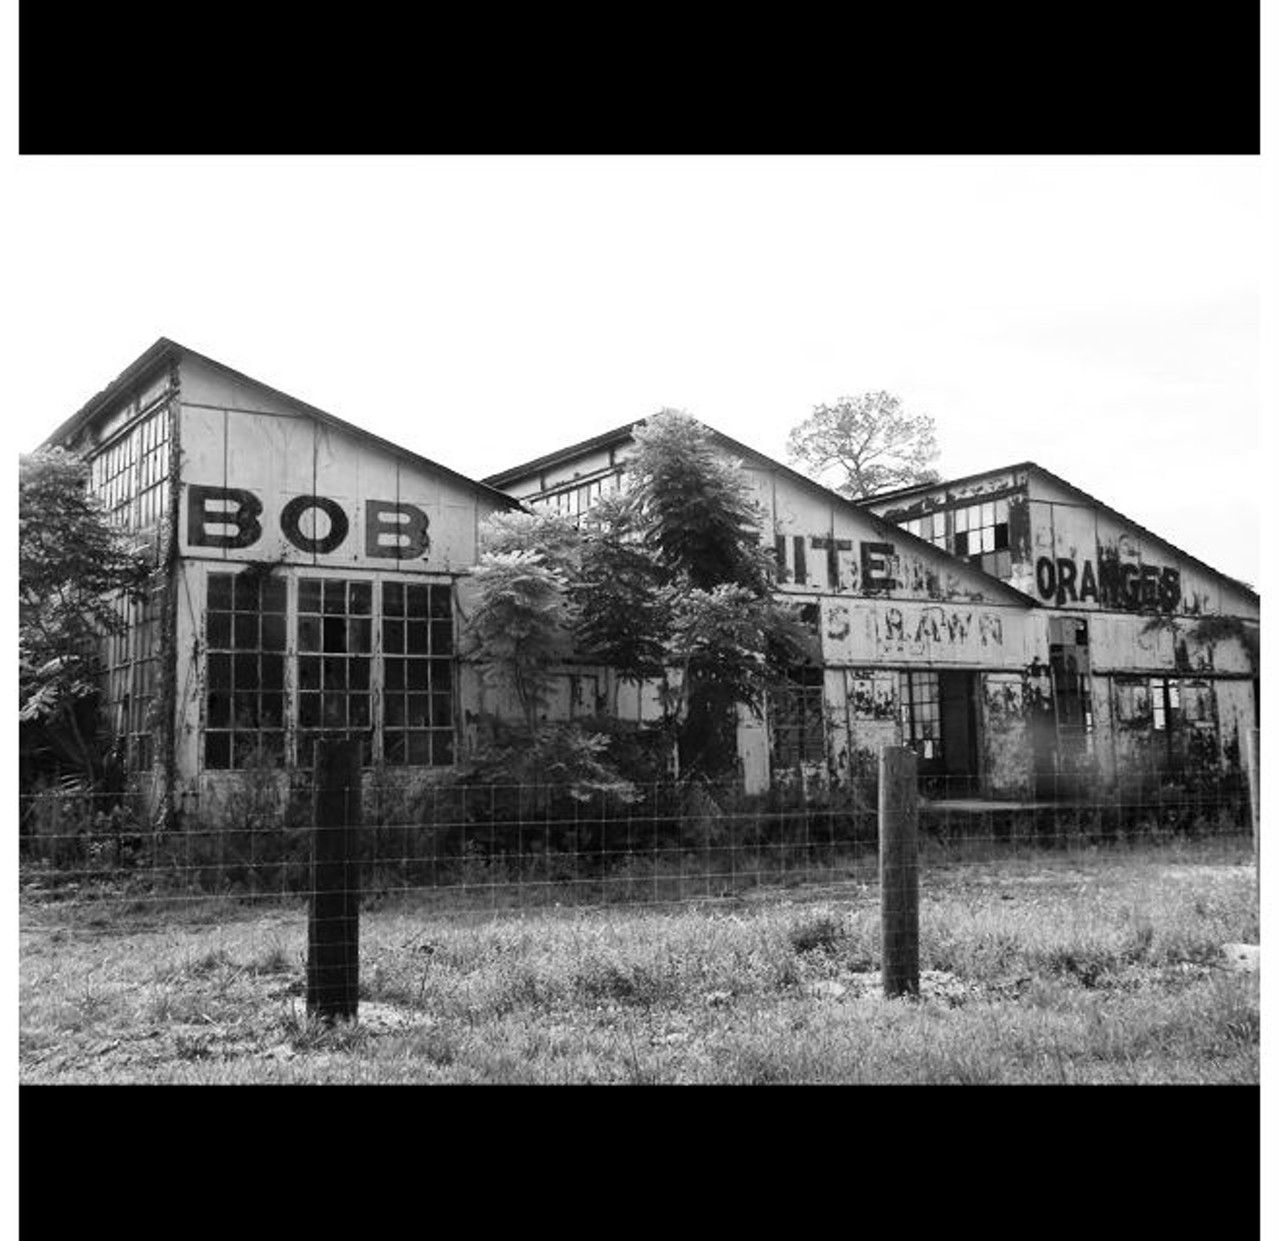 Abandoned building in JacksonvilleInstagram: dmf5471